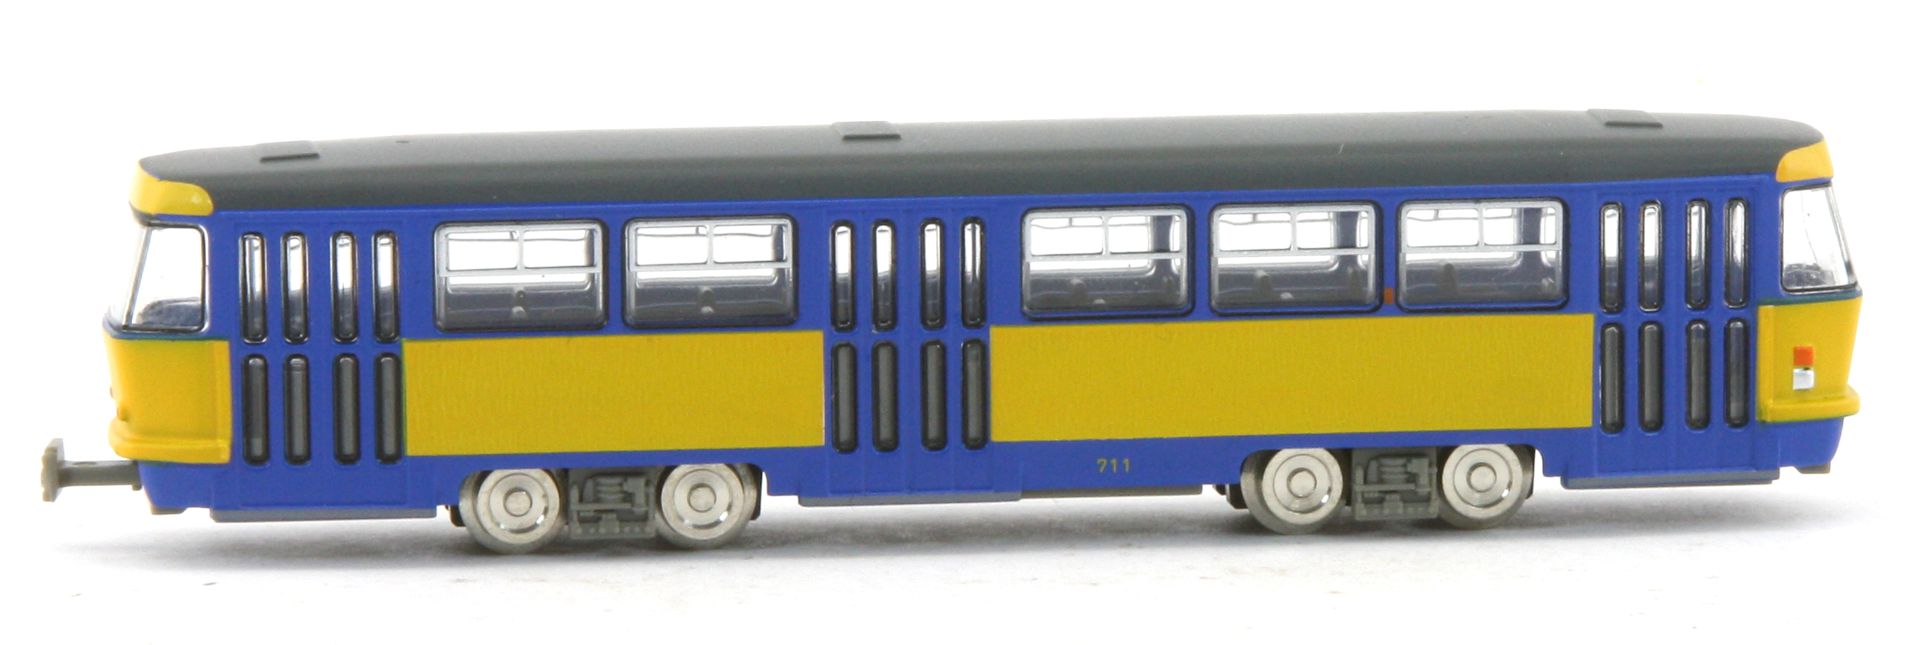 TOMYTEC 977821-AED - Leipziger Straßenbahn Tatra T4-B4, grau-blau-gelb, Ep.IV, DC-Digital